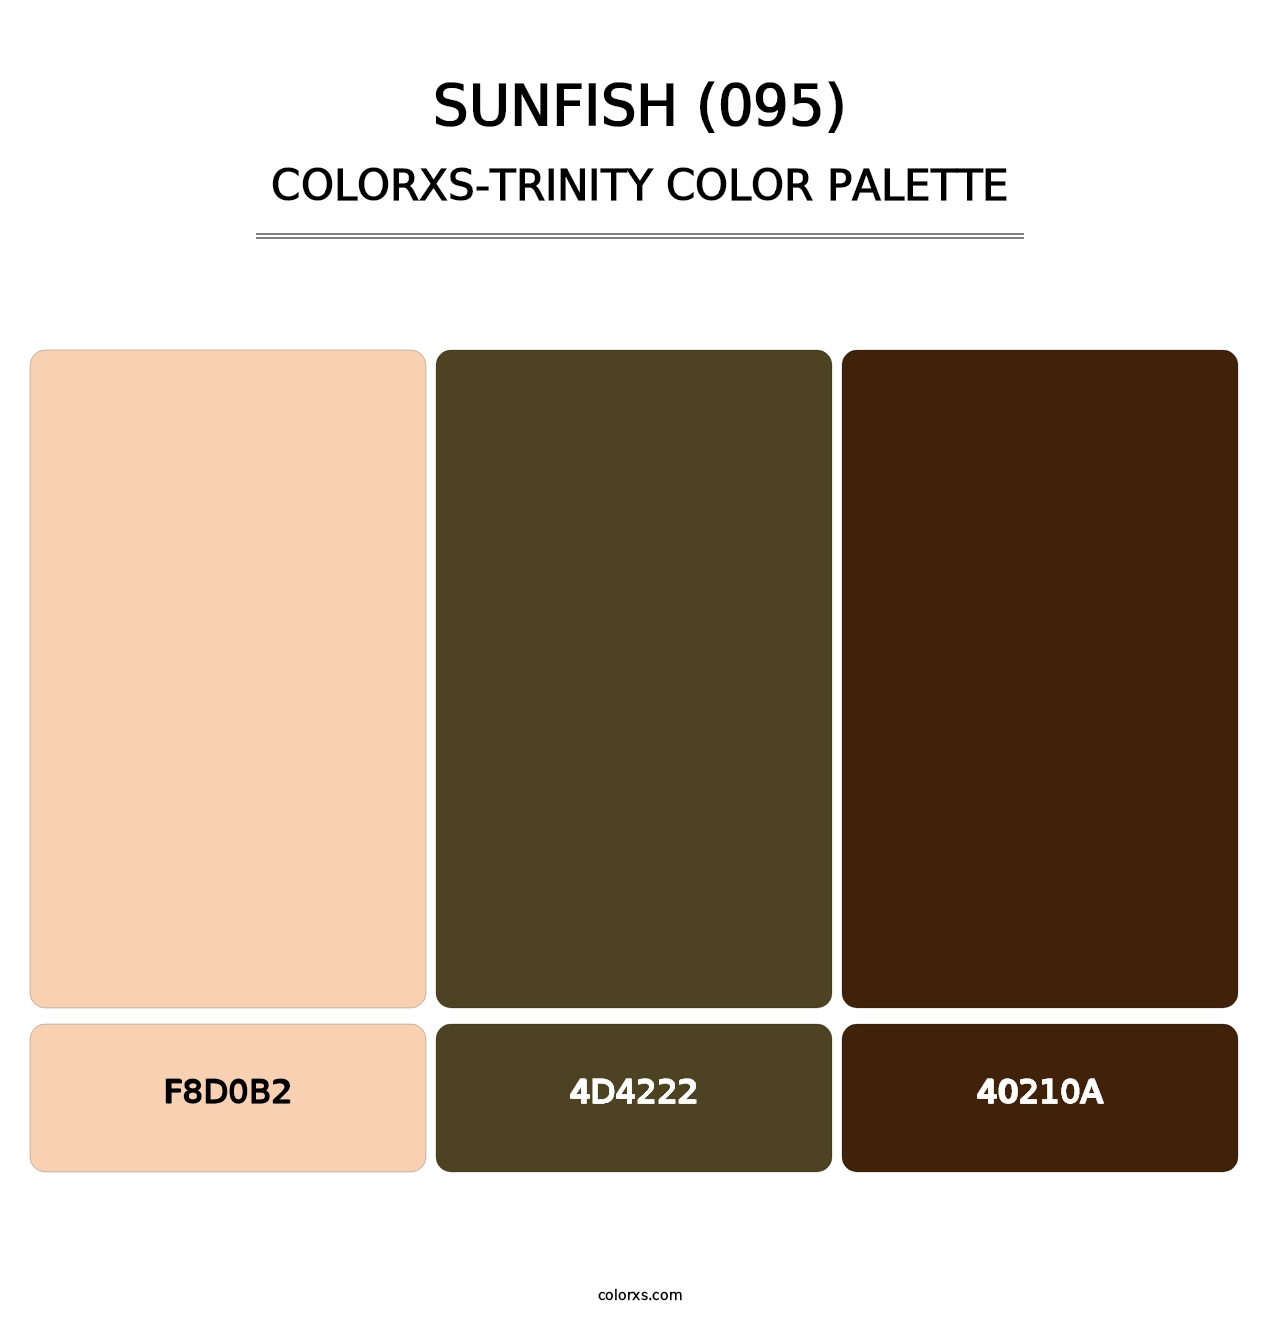 Sunfish (095) - Colorxs Trinity Palette